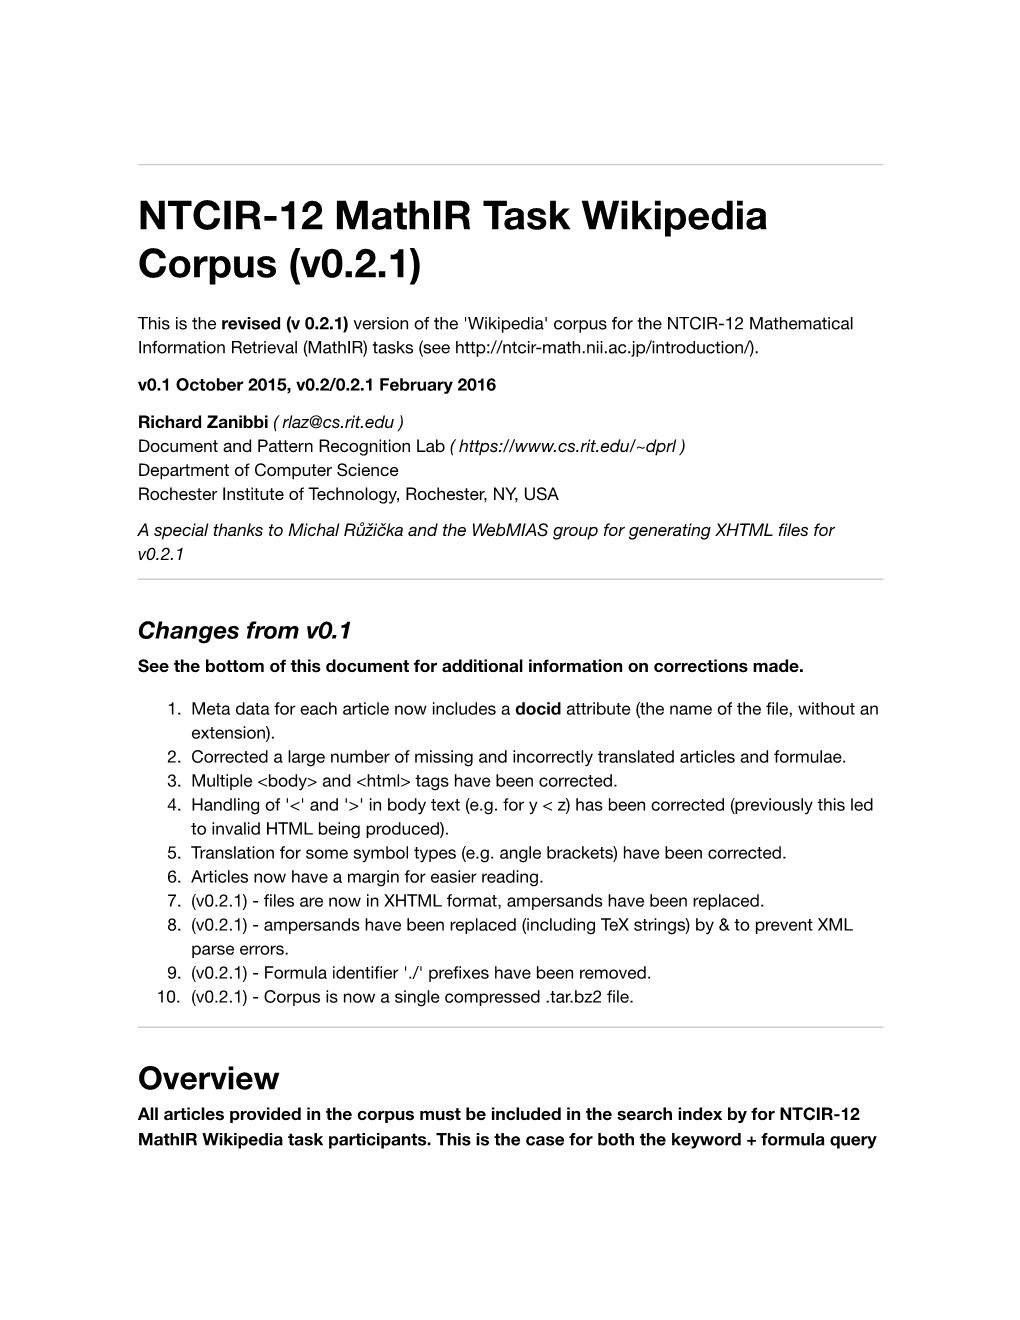 NTCIR-12 Mathir Task Wikipedia Corpus (V0.2.1)